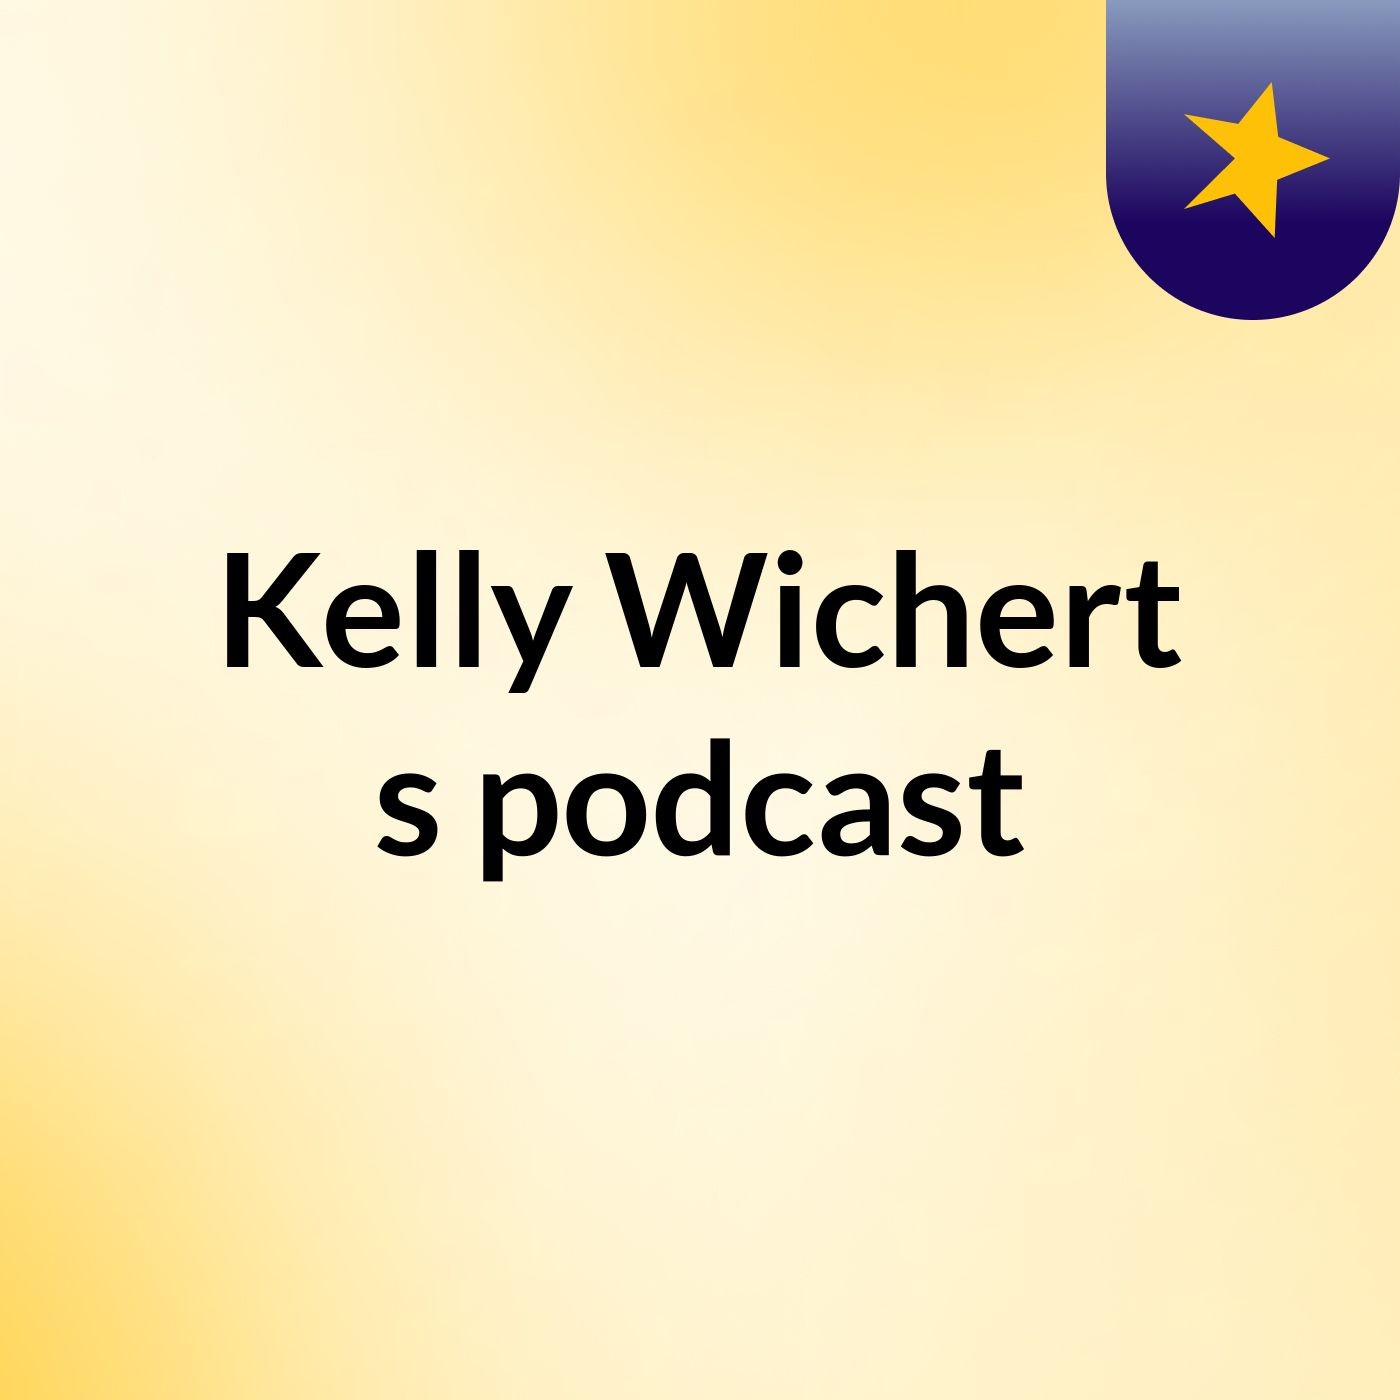 Kelly Wichert's podcast